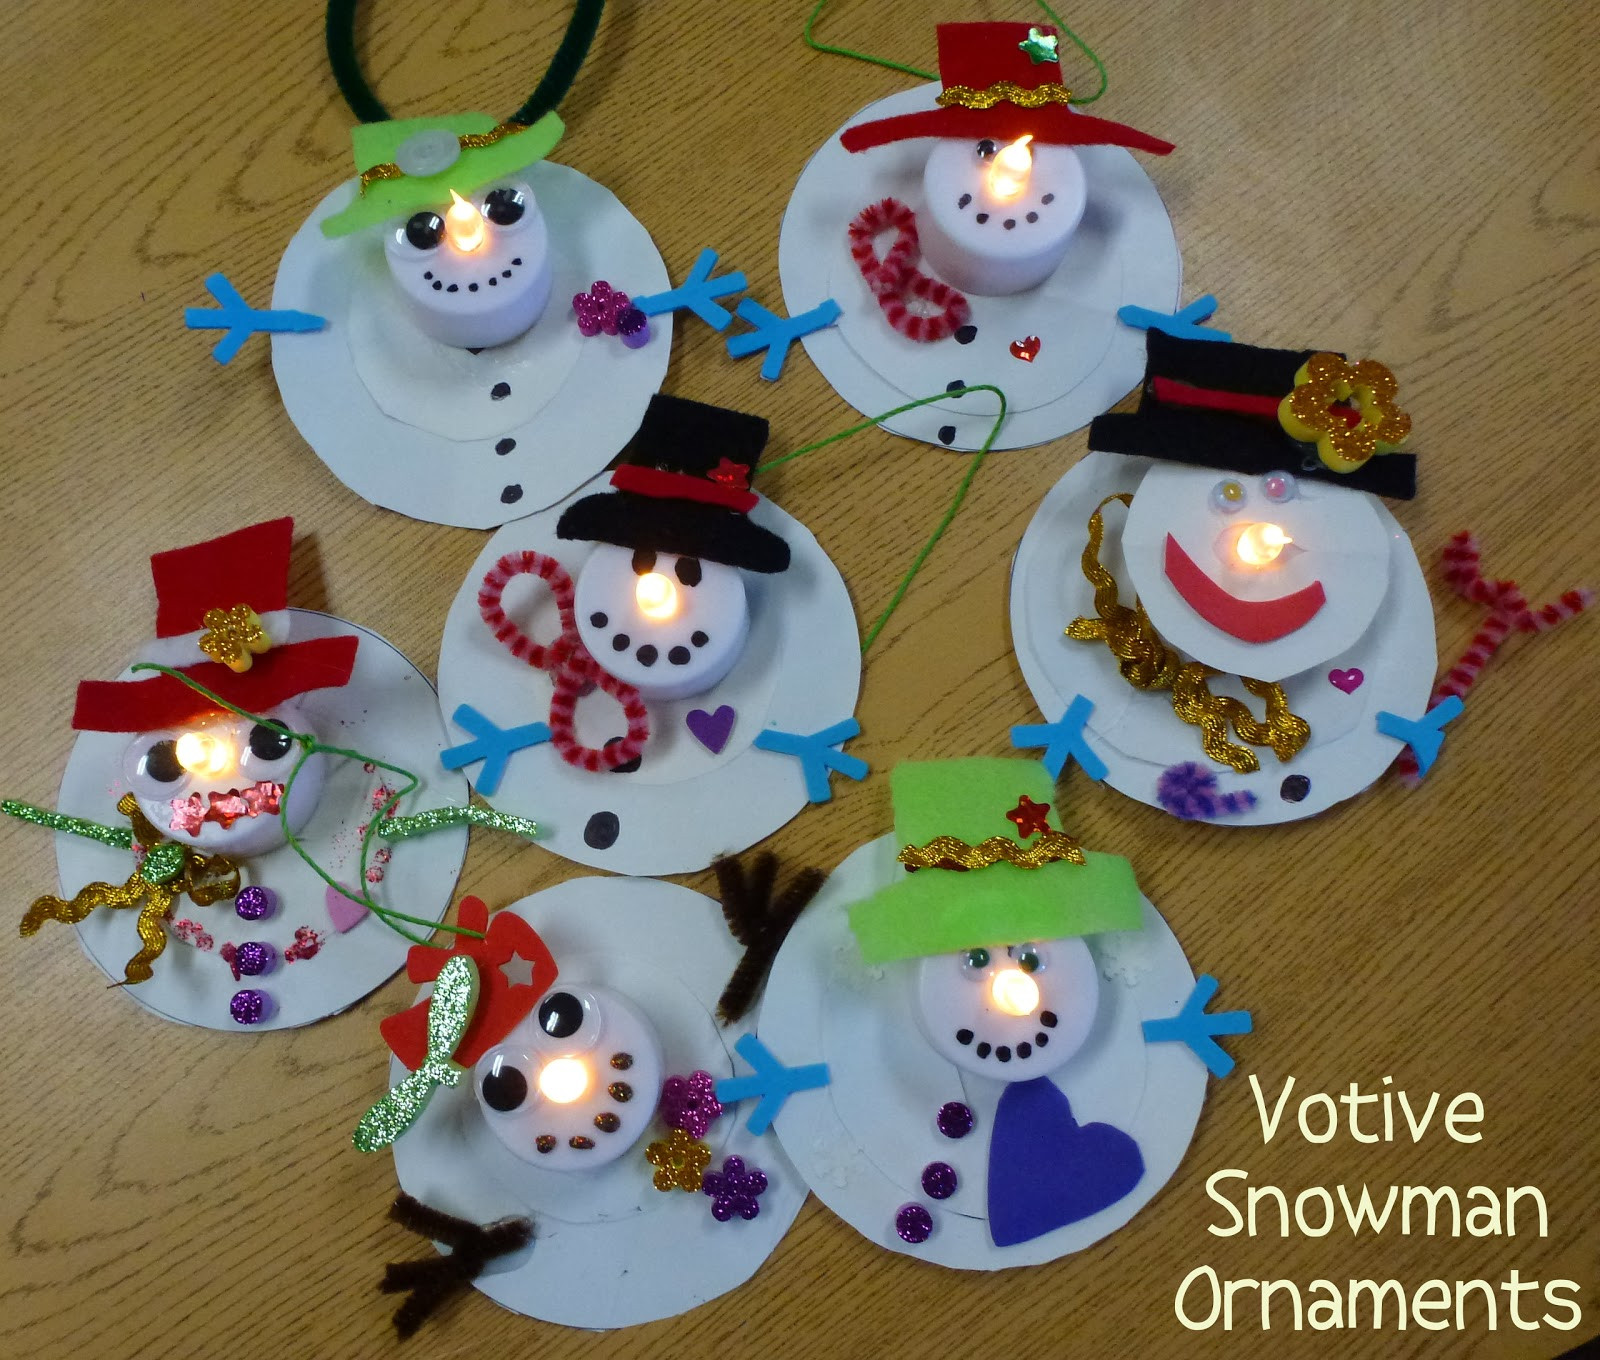 Preschool Christmas Ornament Craft Ideas
 Choices for Children Votive Snowman Ornaments